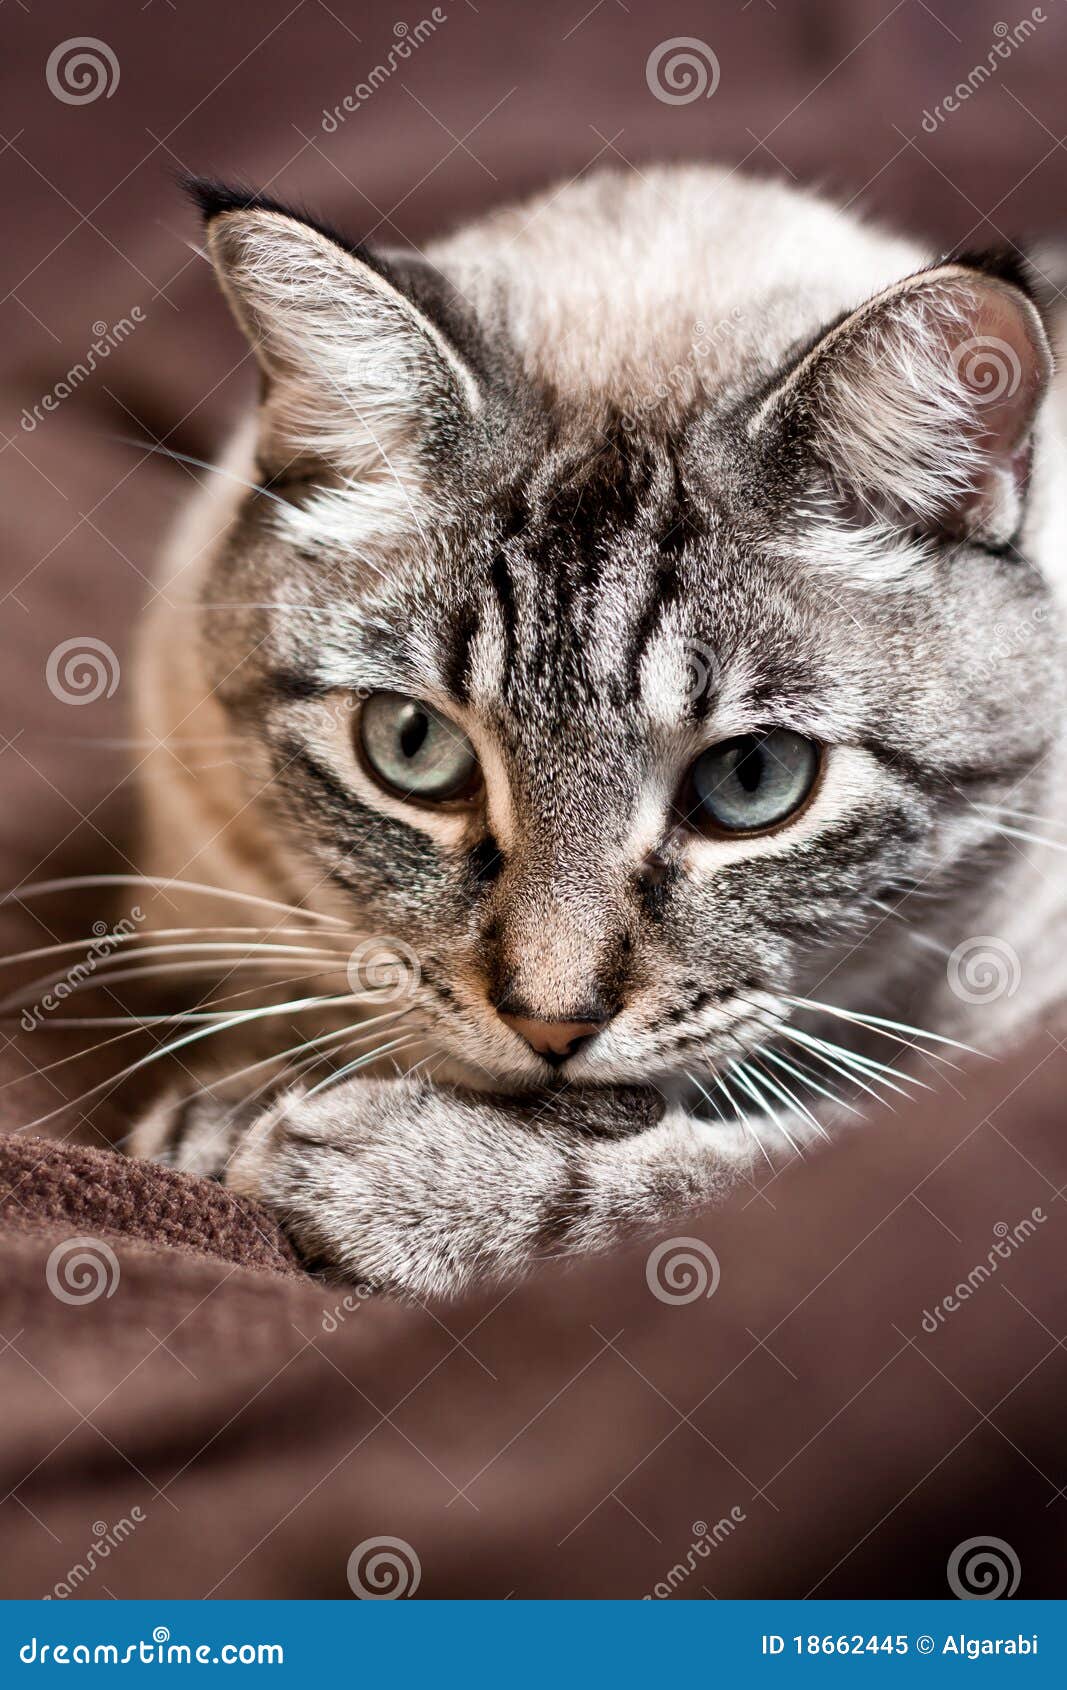 The thinking cat  stock image Image of little background 